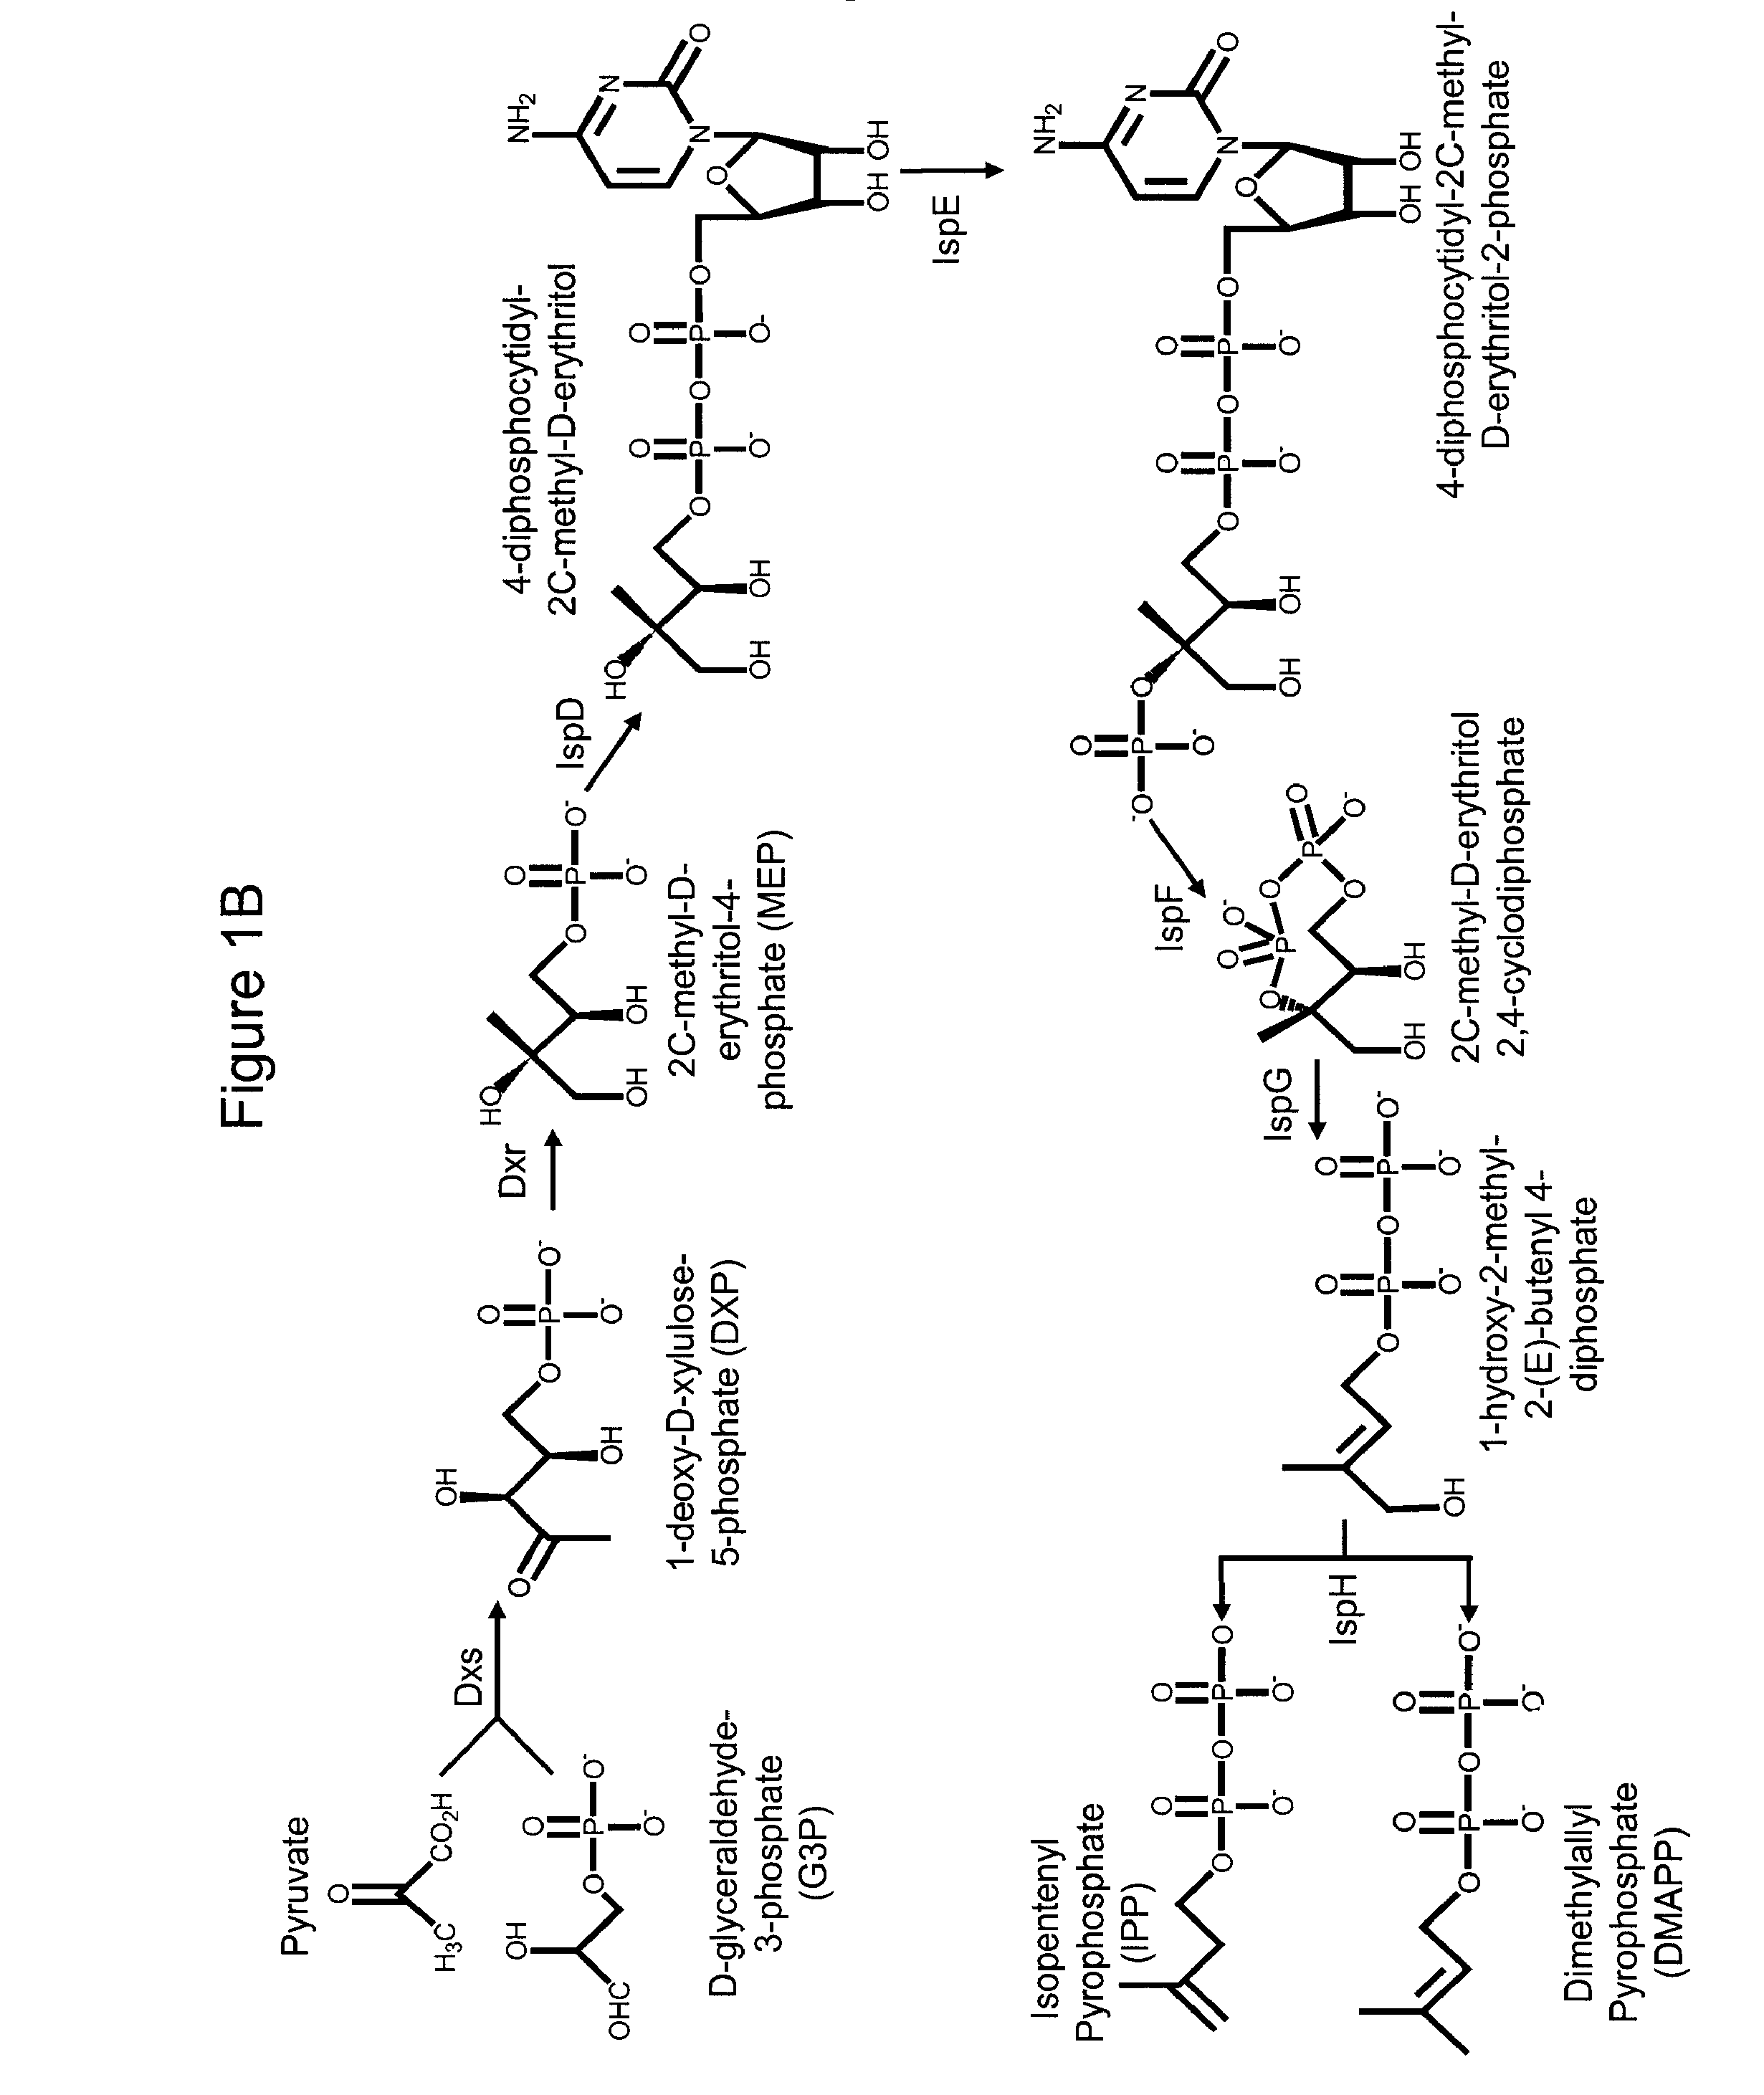 Production of isoprenoids